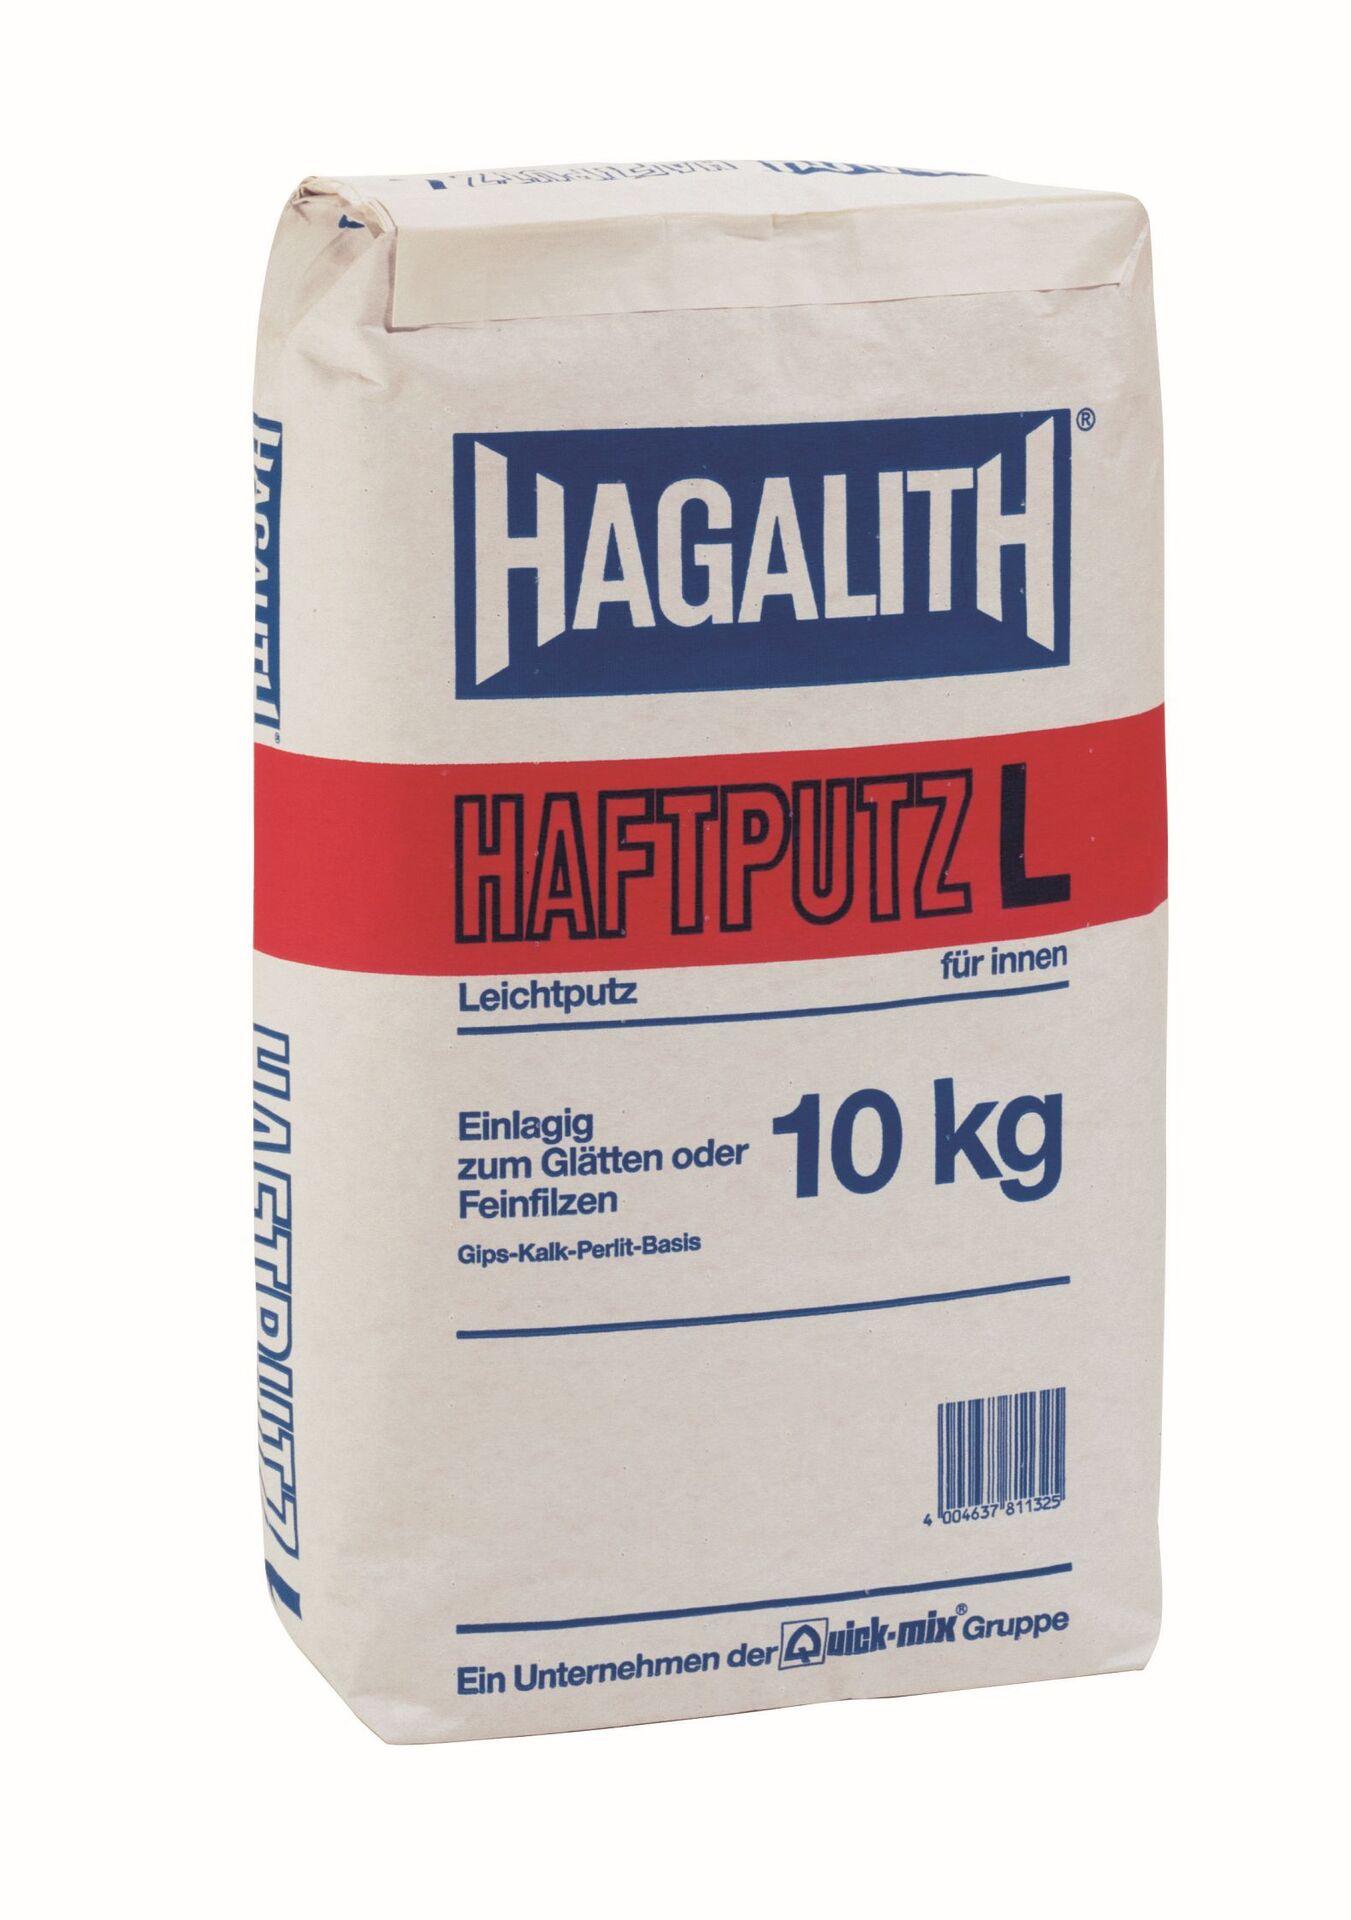 Sievert Baustoffe GmbH Hagalith-Haftputz L